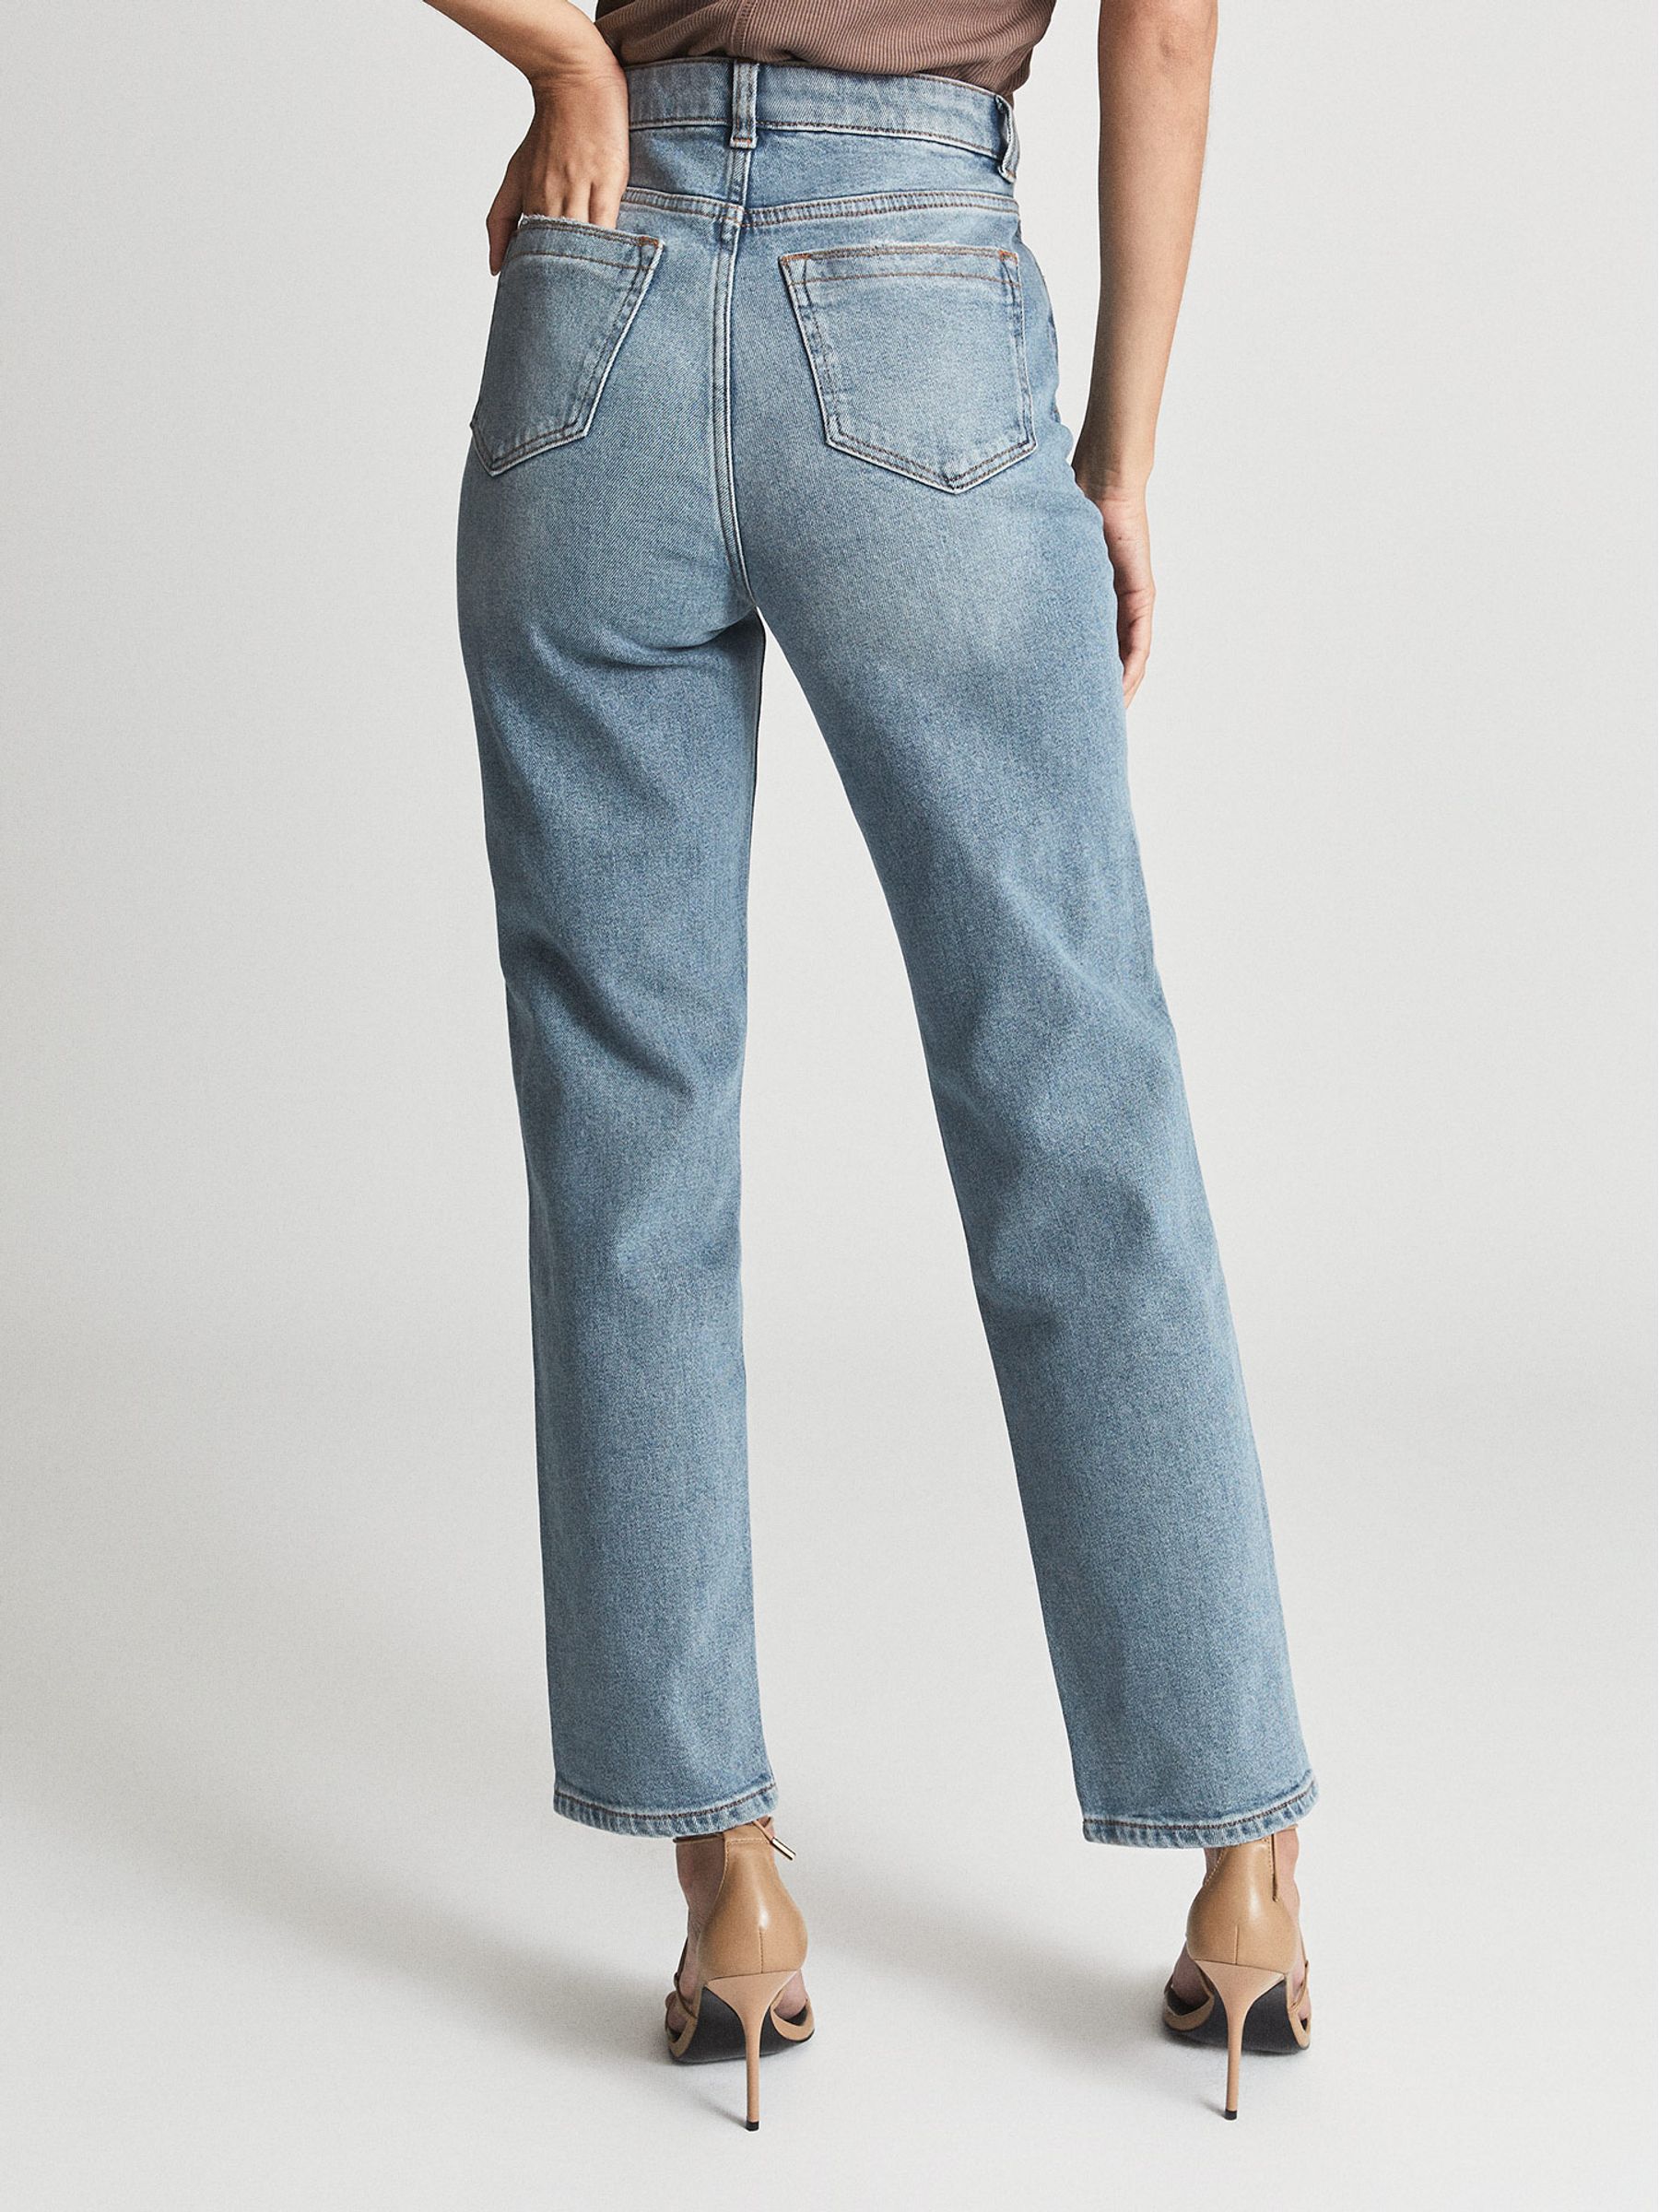 Reiss Mid Blue Bay High Rise Slim Straight Cut Jeans | REISS USA